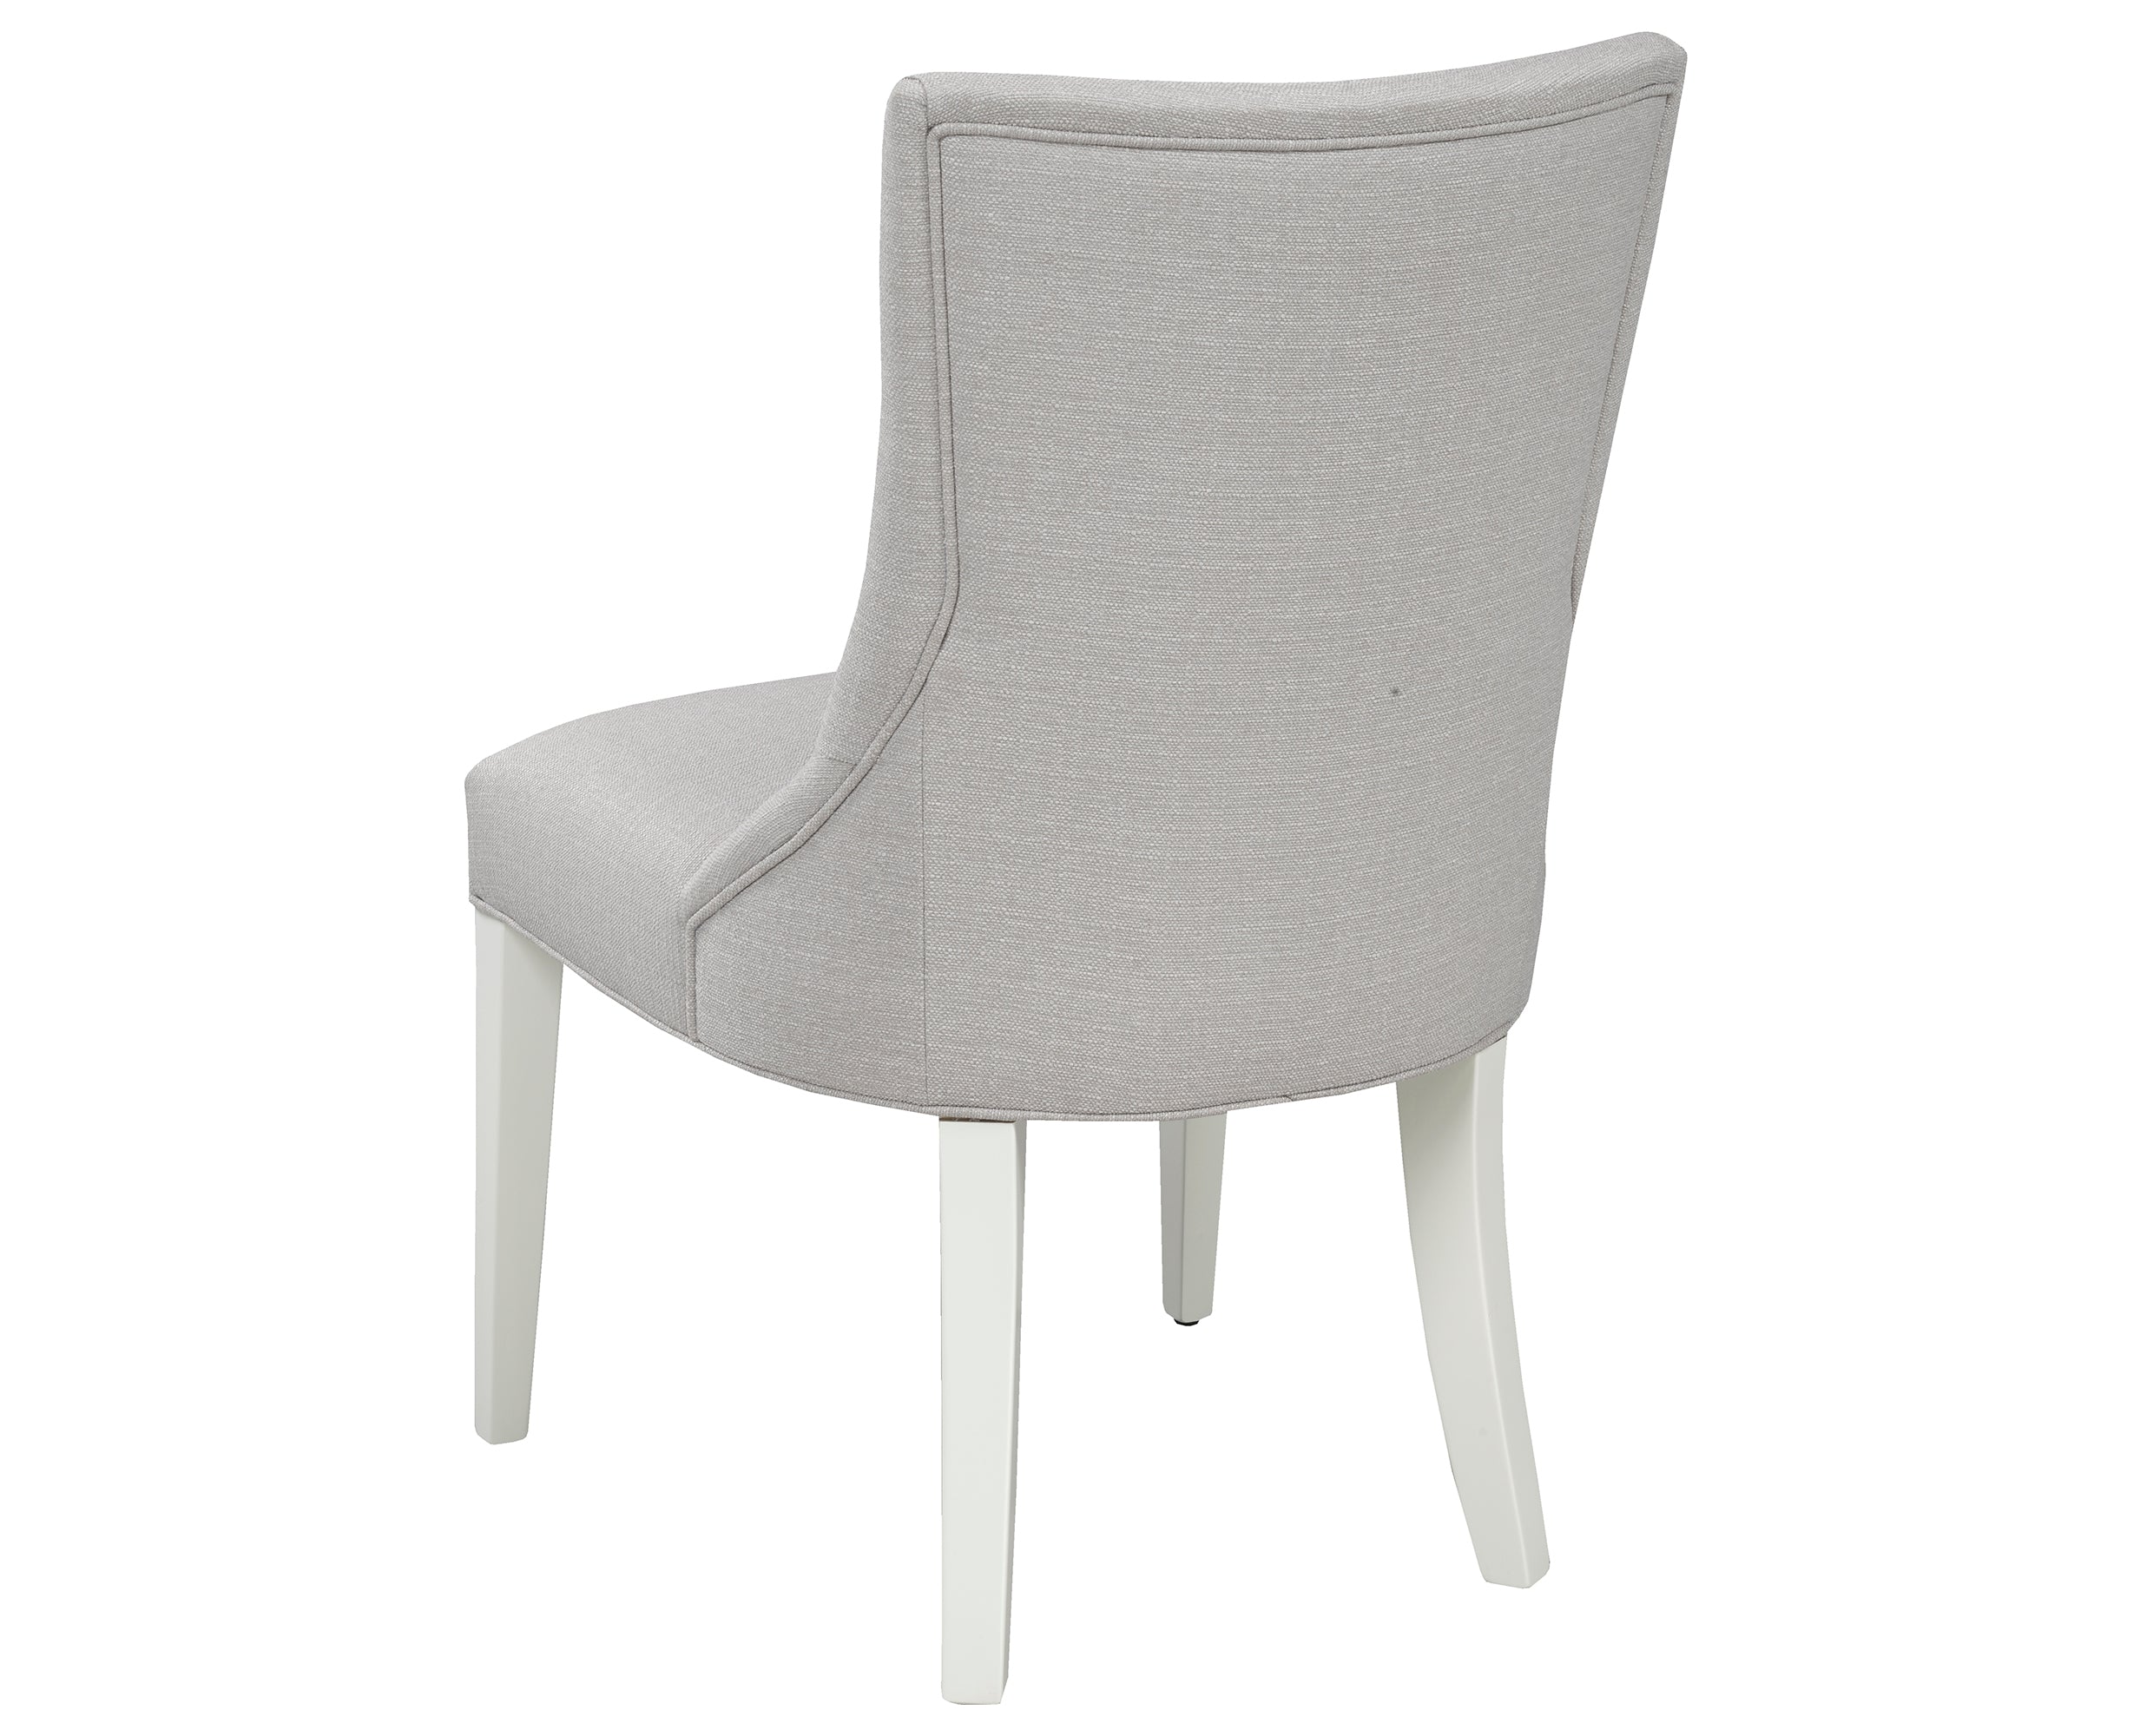 Chair as Shown | Cardinal Woodcraft Kolding Dining Chair | Valley Ridge Furniture